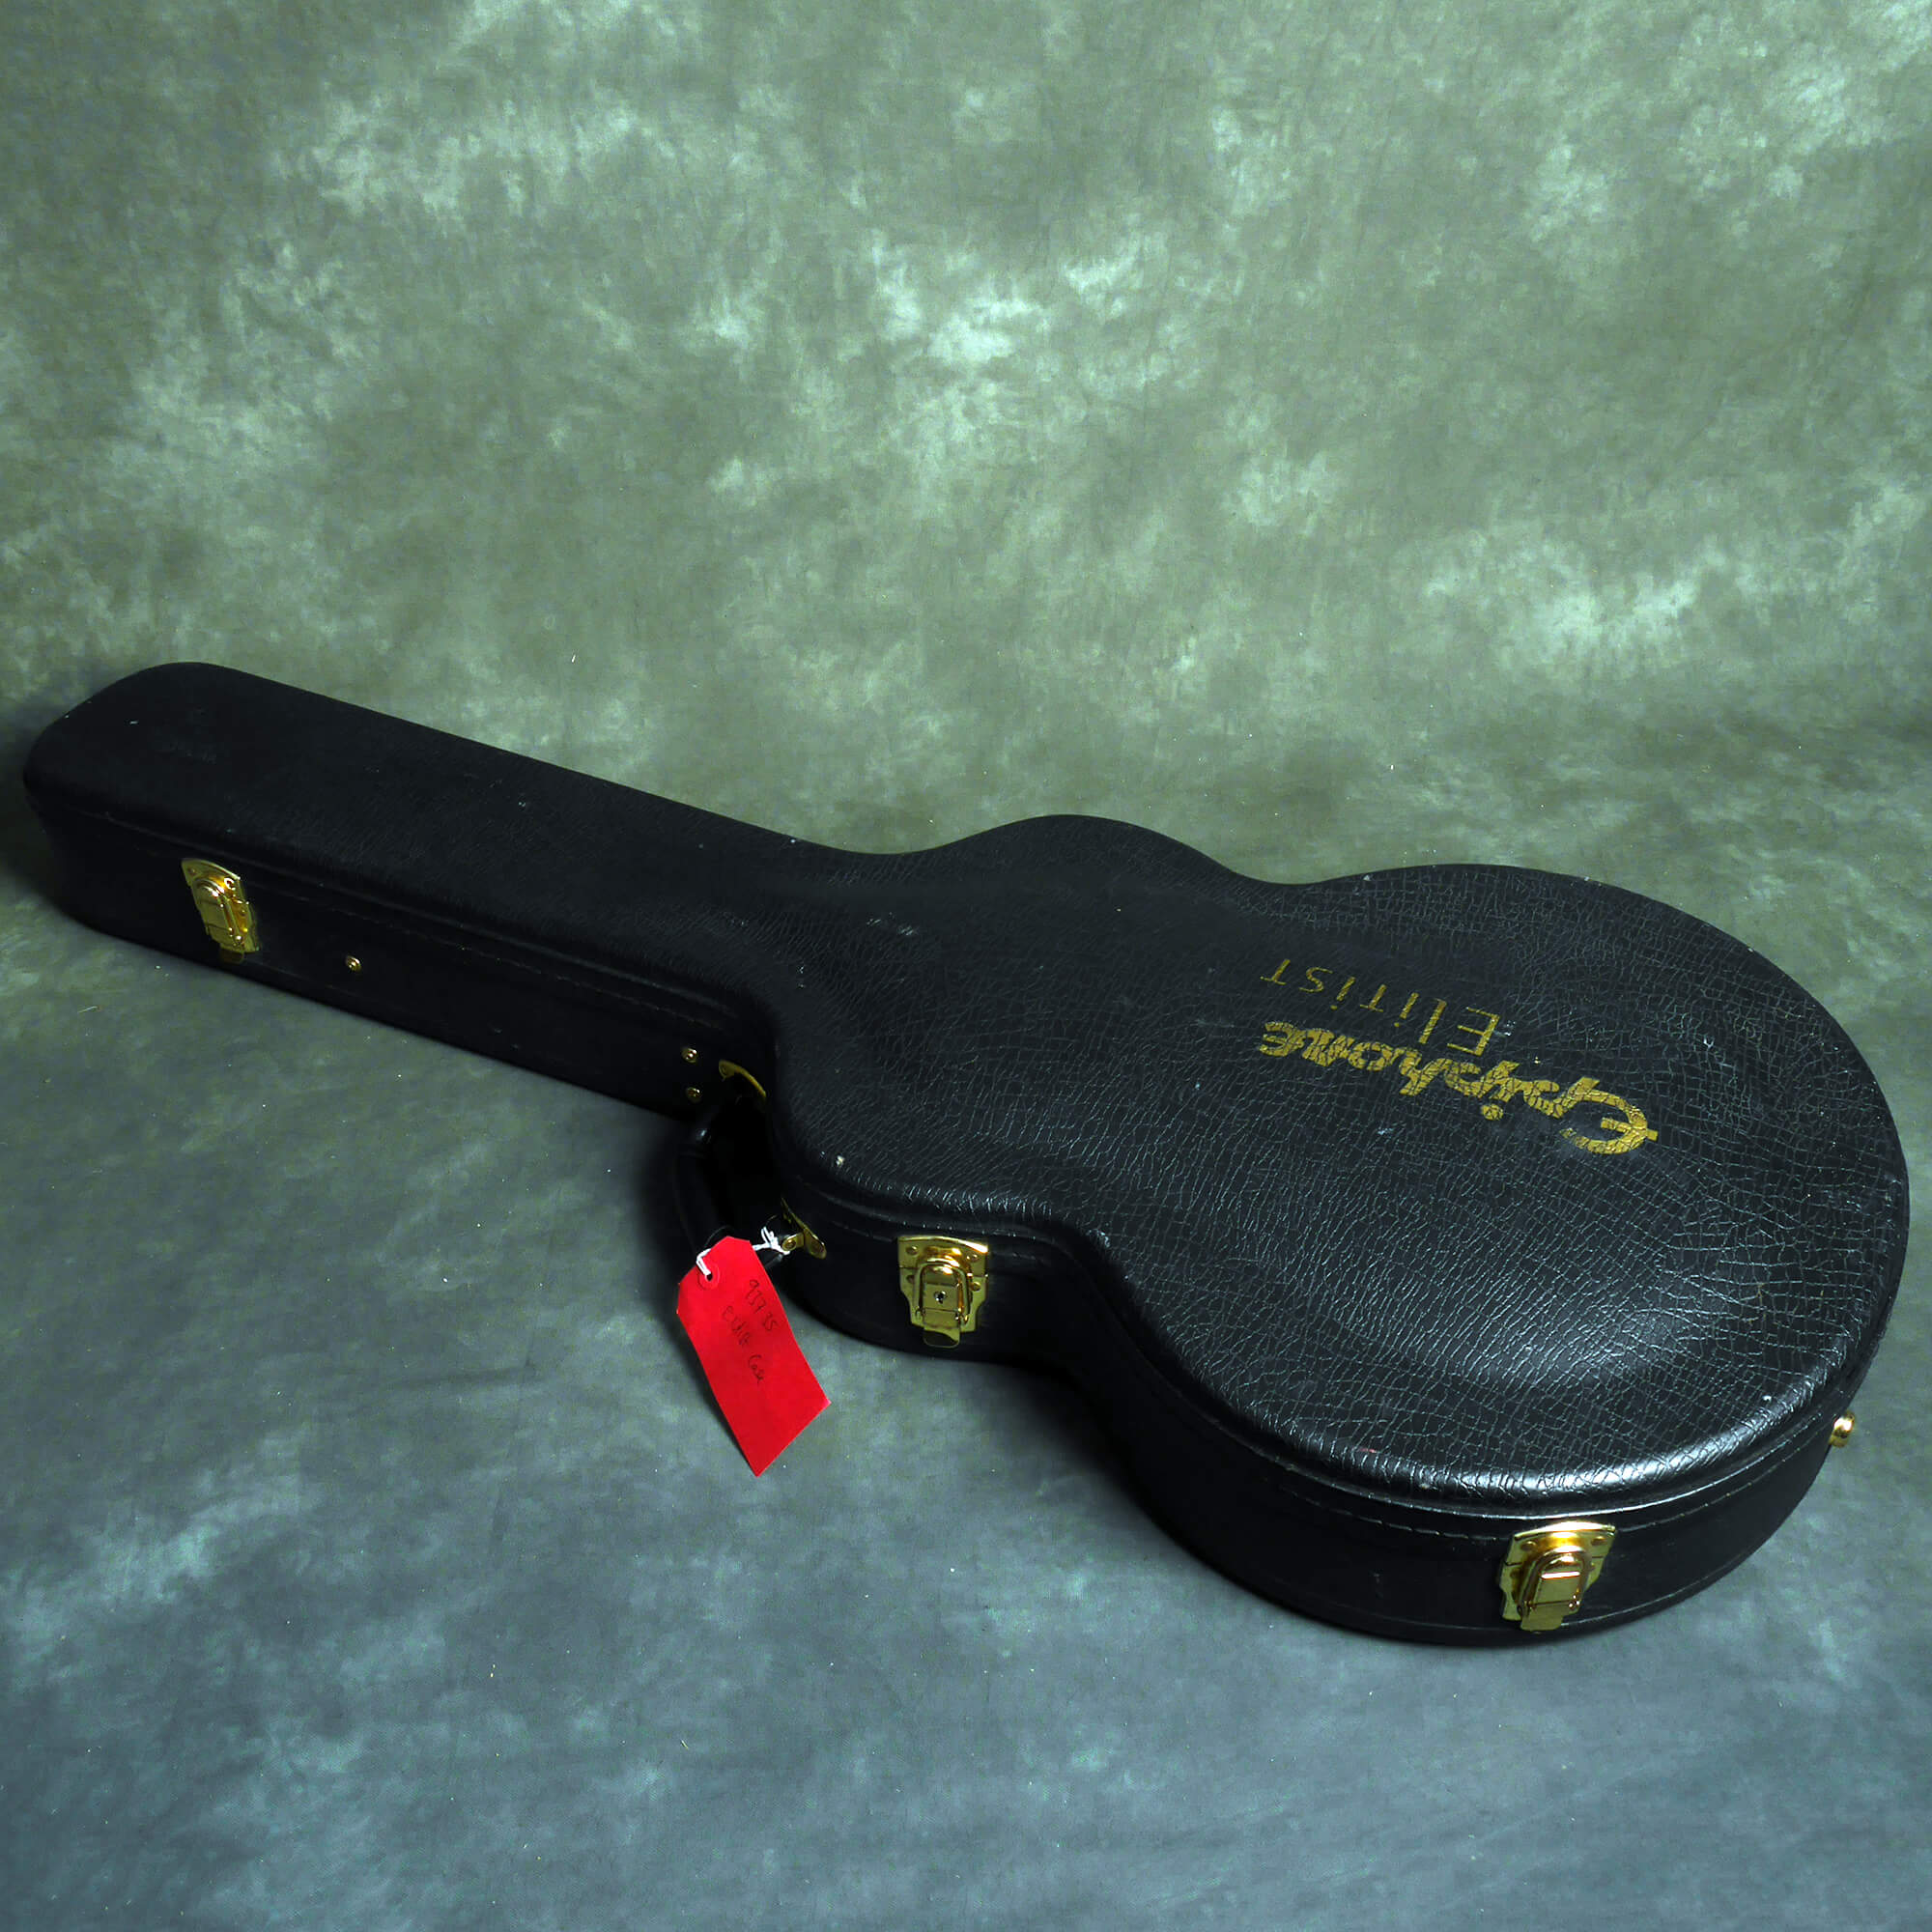 epiphone casino guitar case